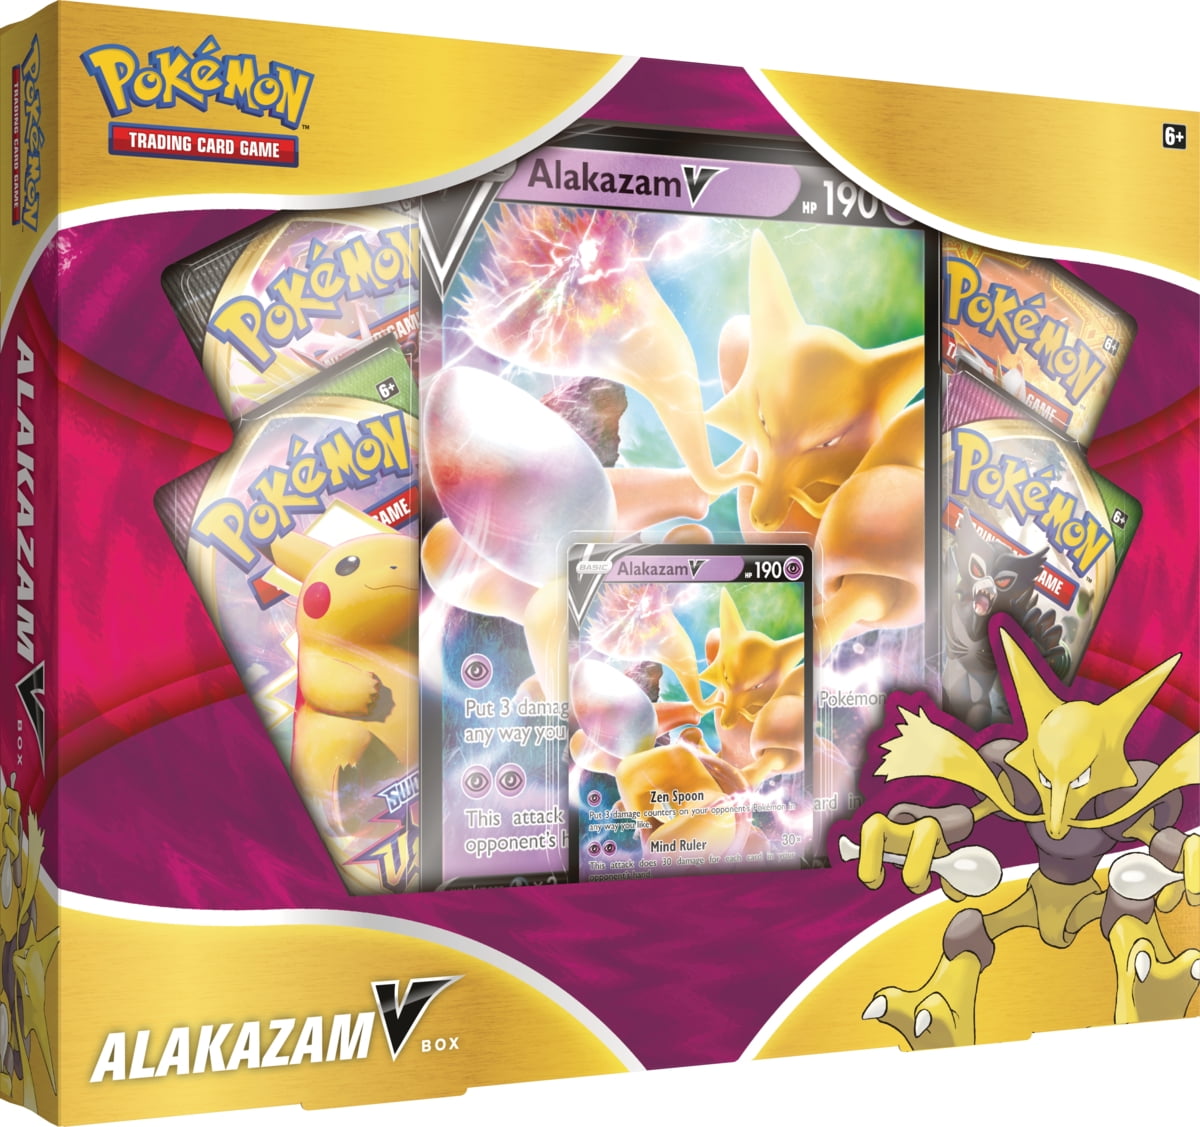 Pokémon Alakazam V Box Trading Card Game POK80748 for sale online 